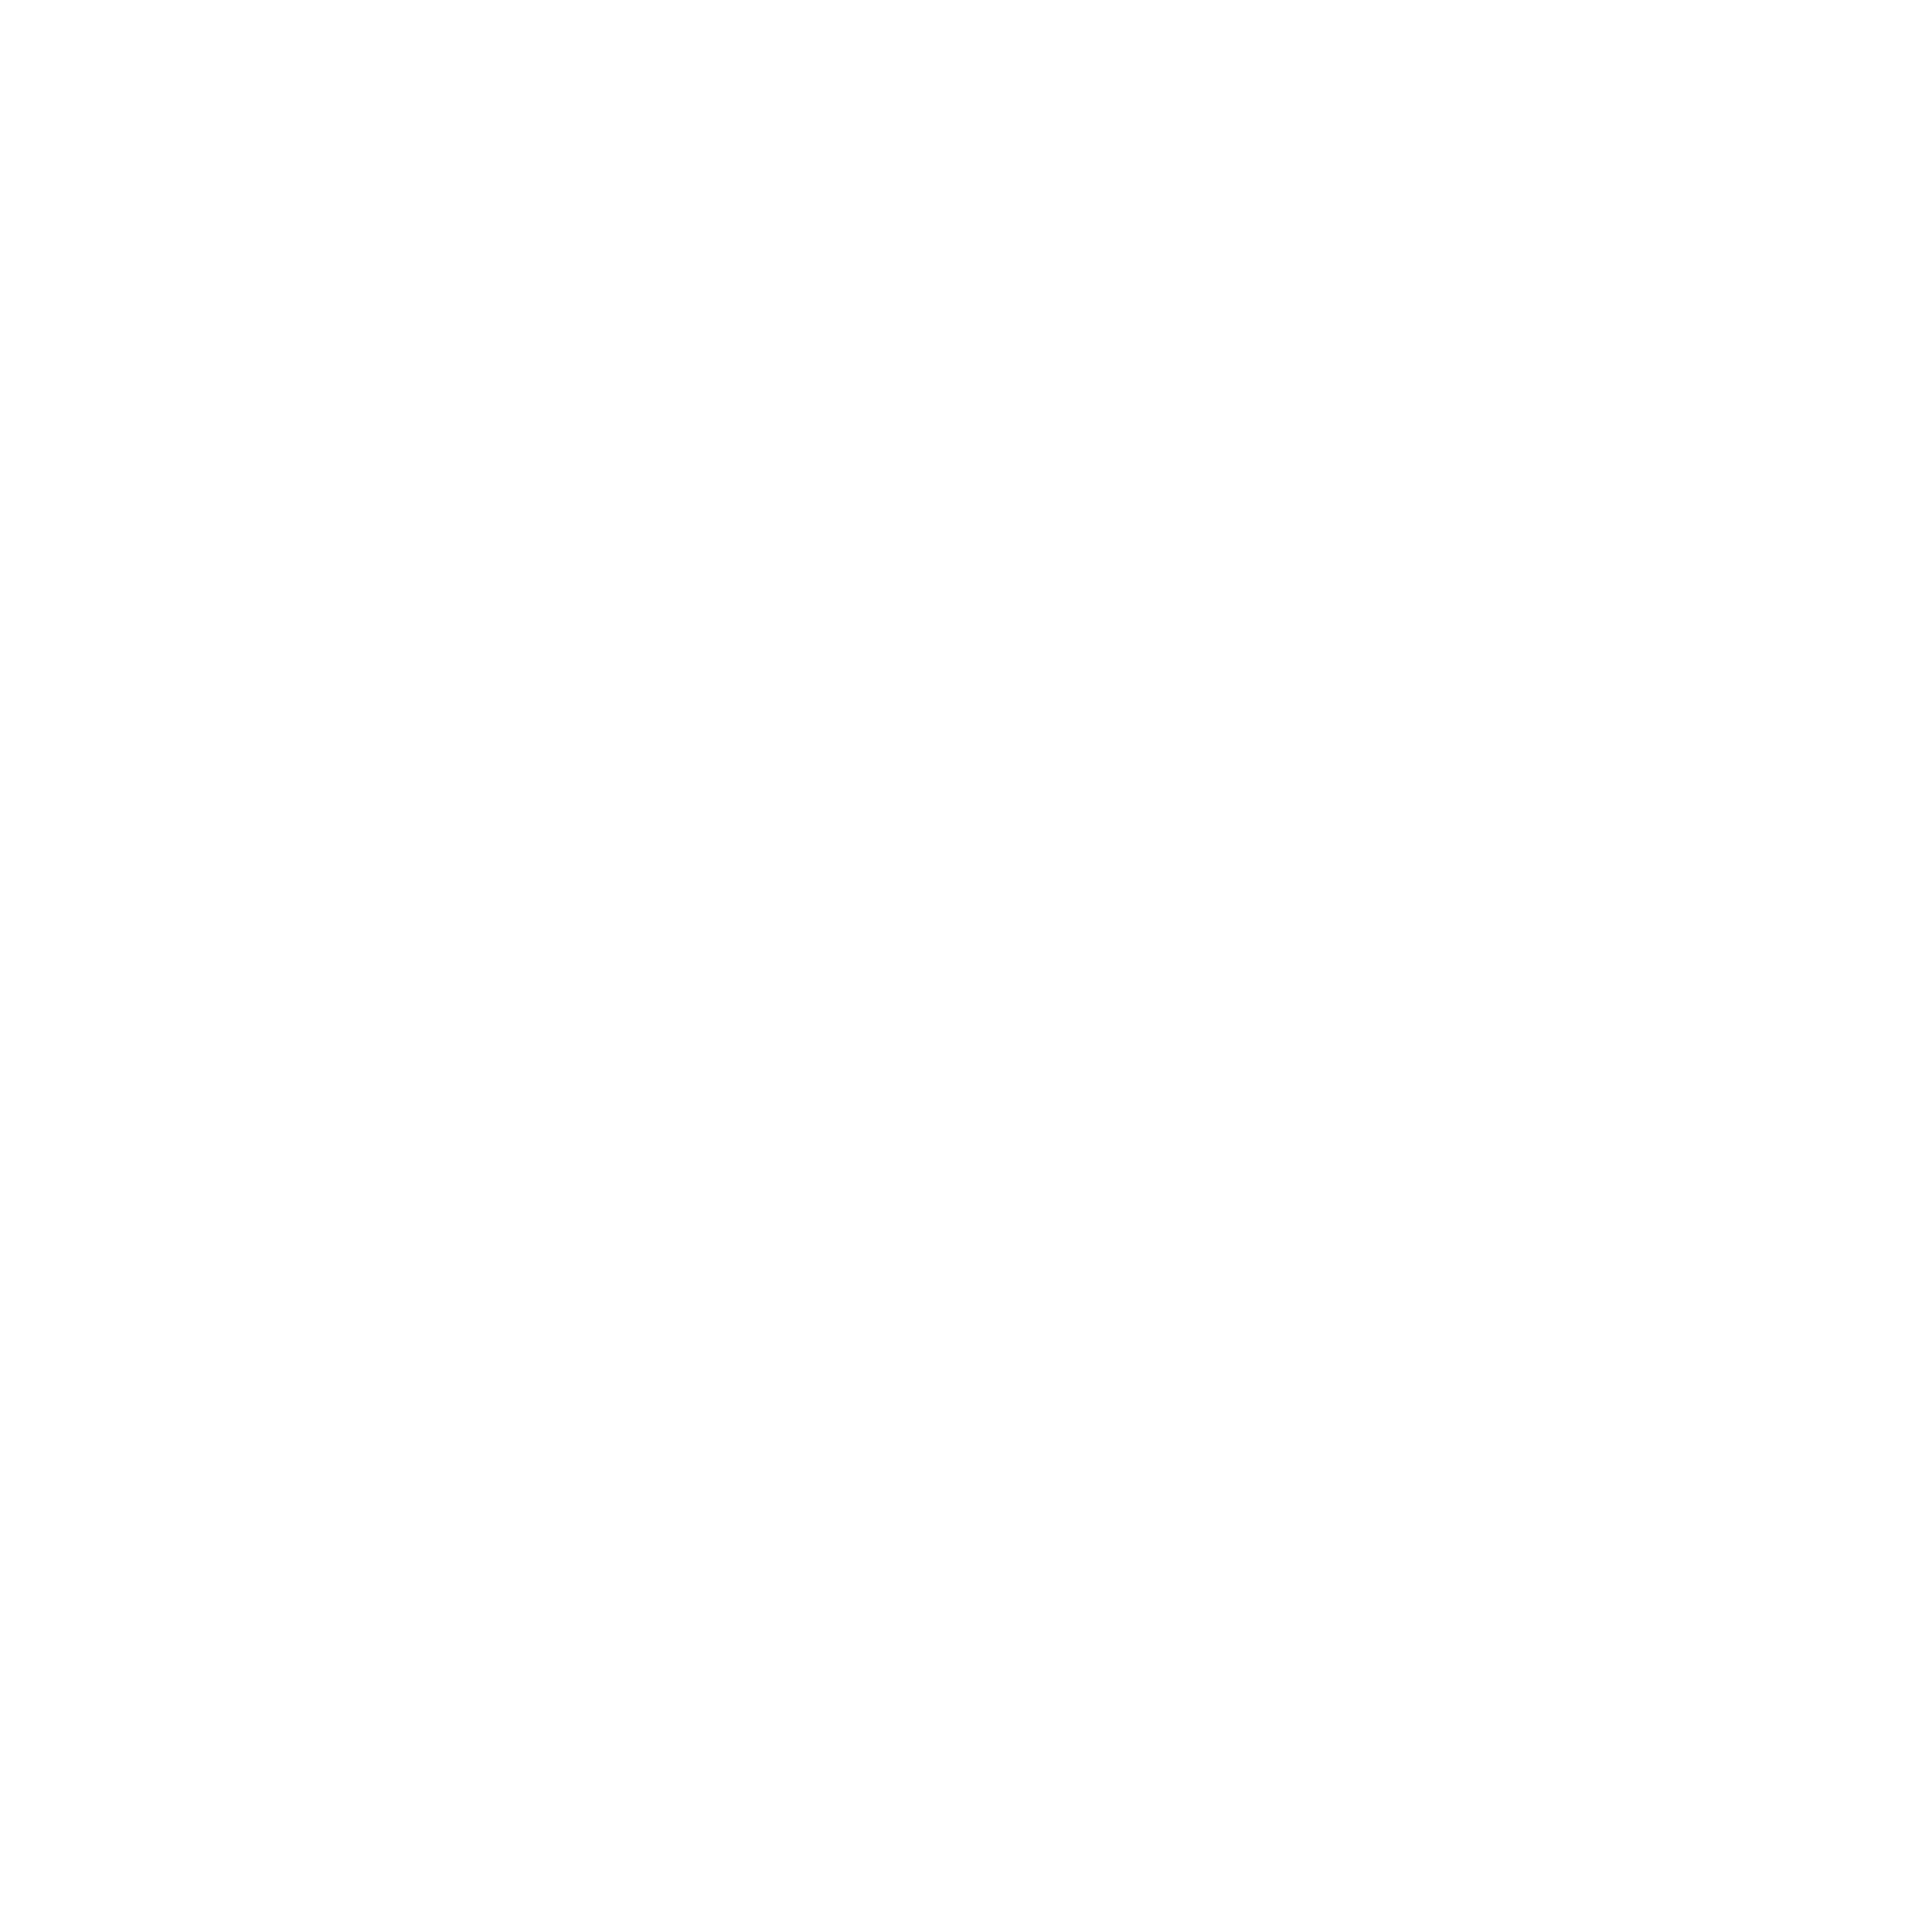 www.exploraeg.com